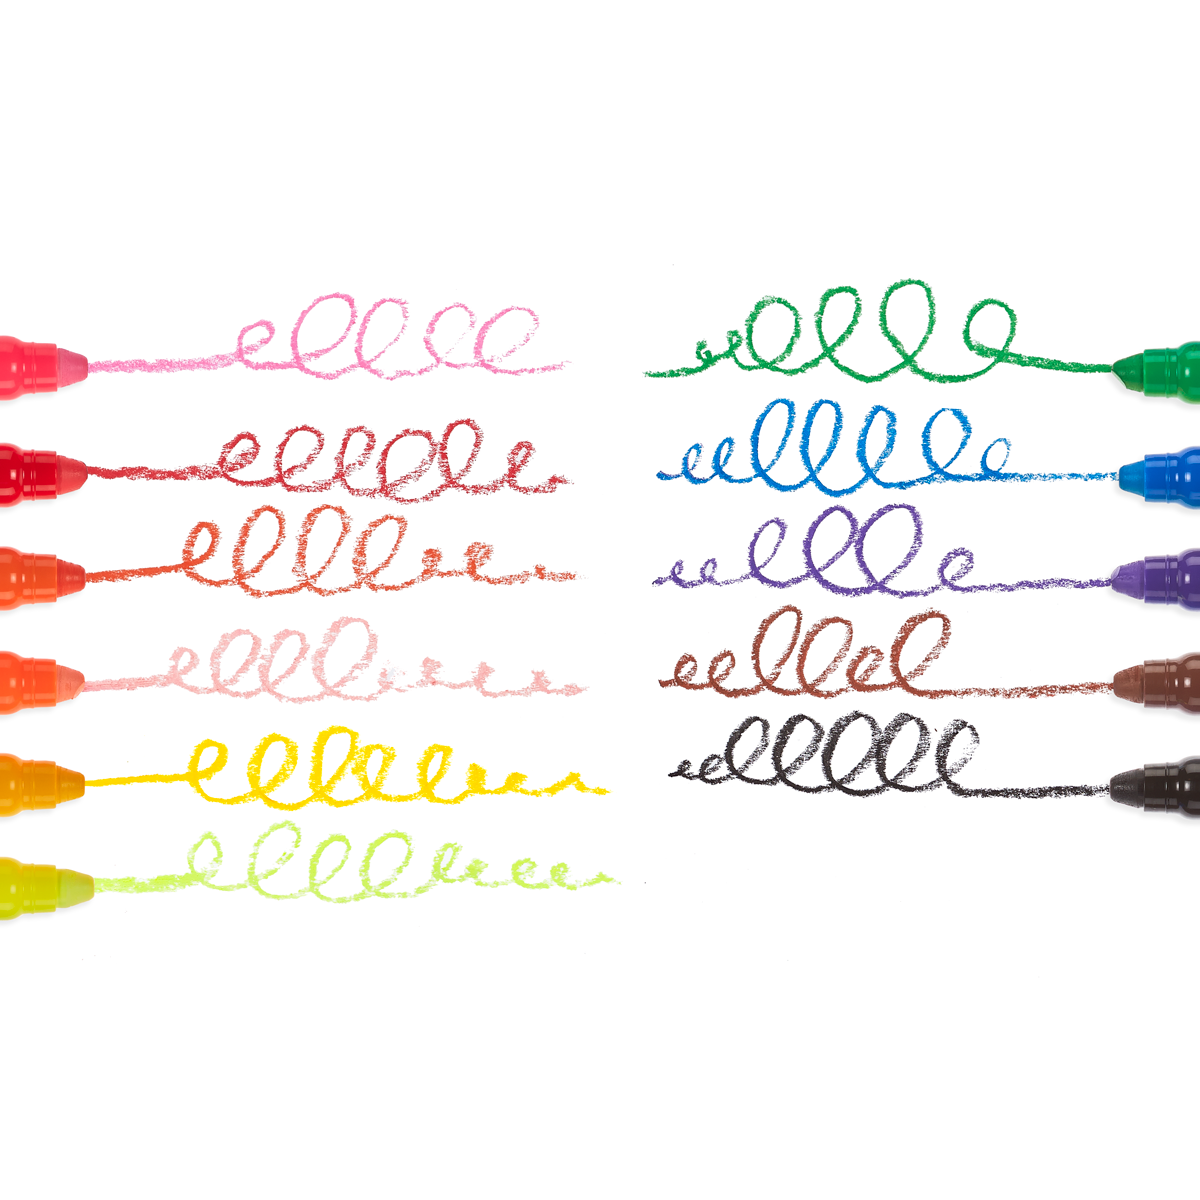 Gel Window Crayons by Ooly – Purple Tree Mama